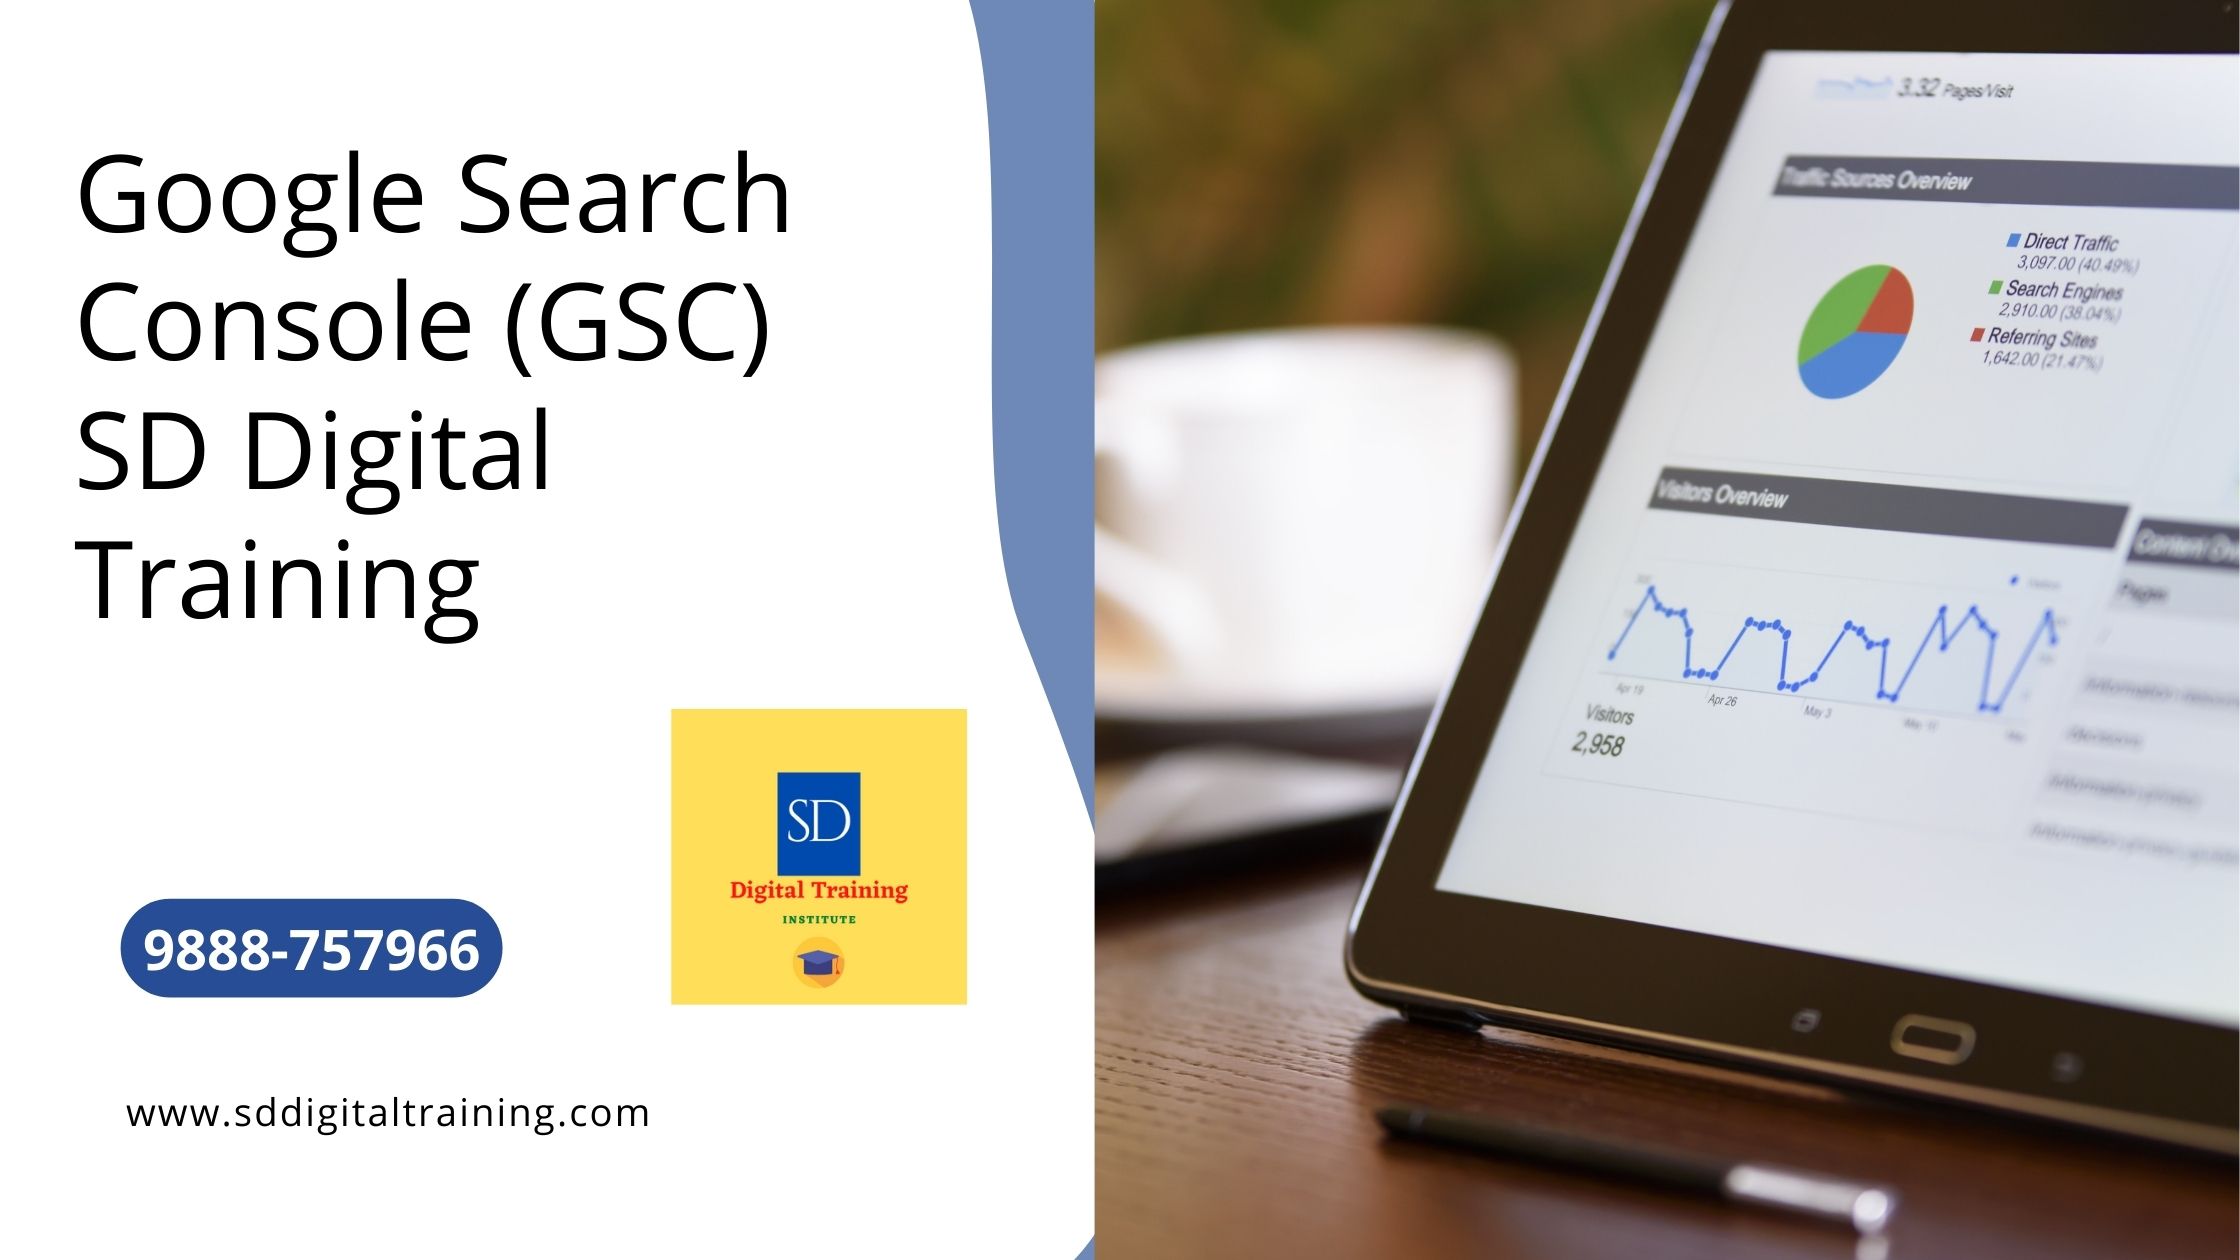 Google Search Console (GSC) SD Digital Training